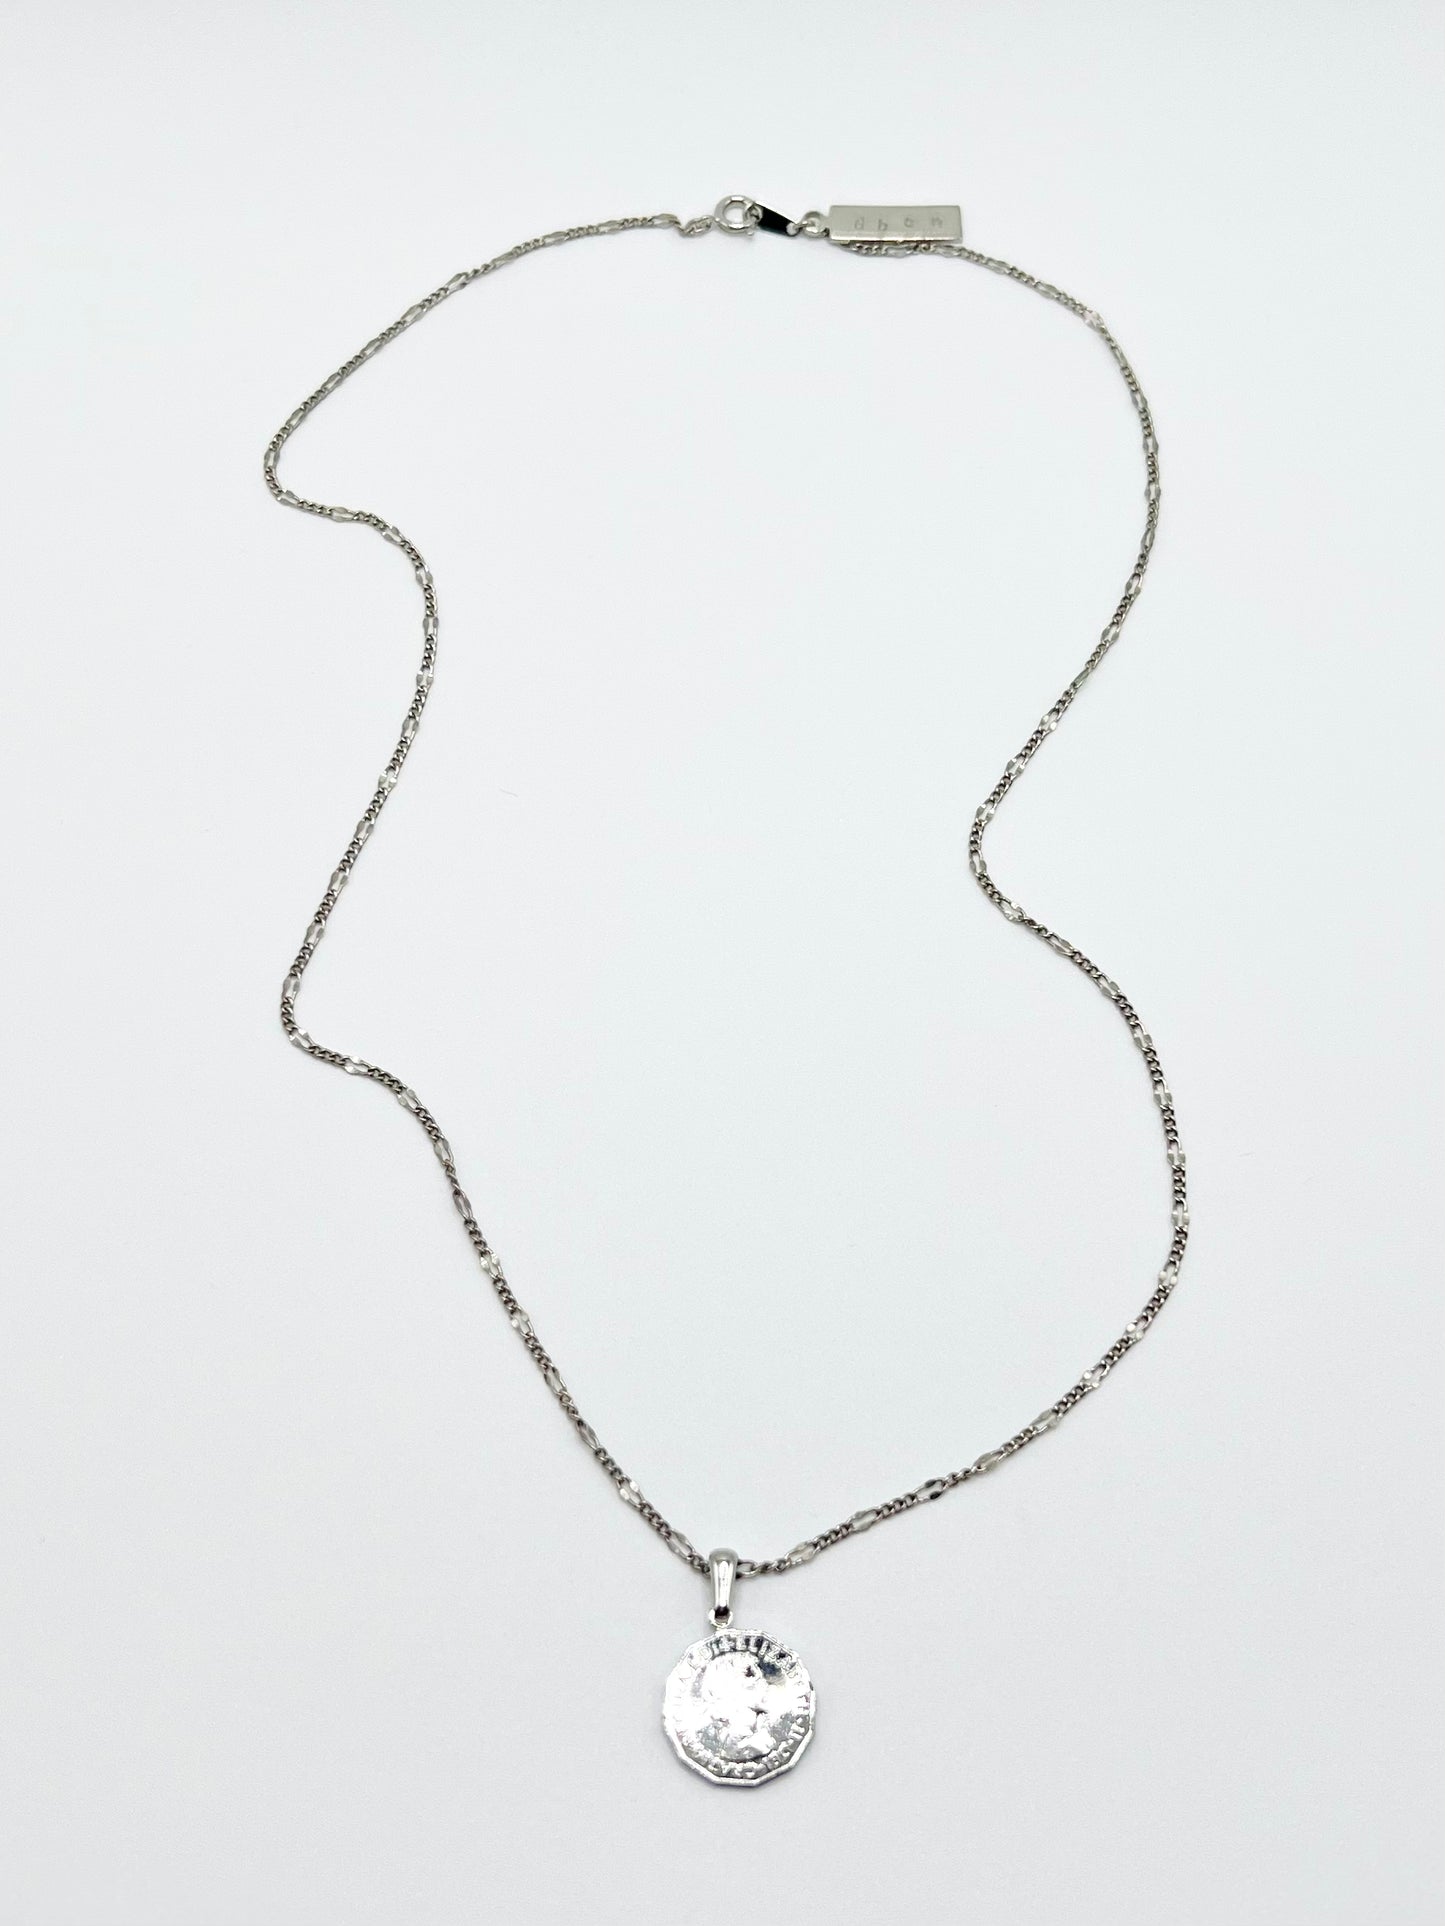 NW coin motif necklace - Silver